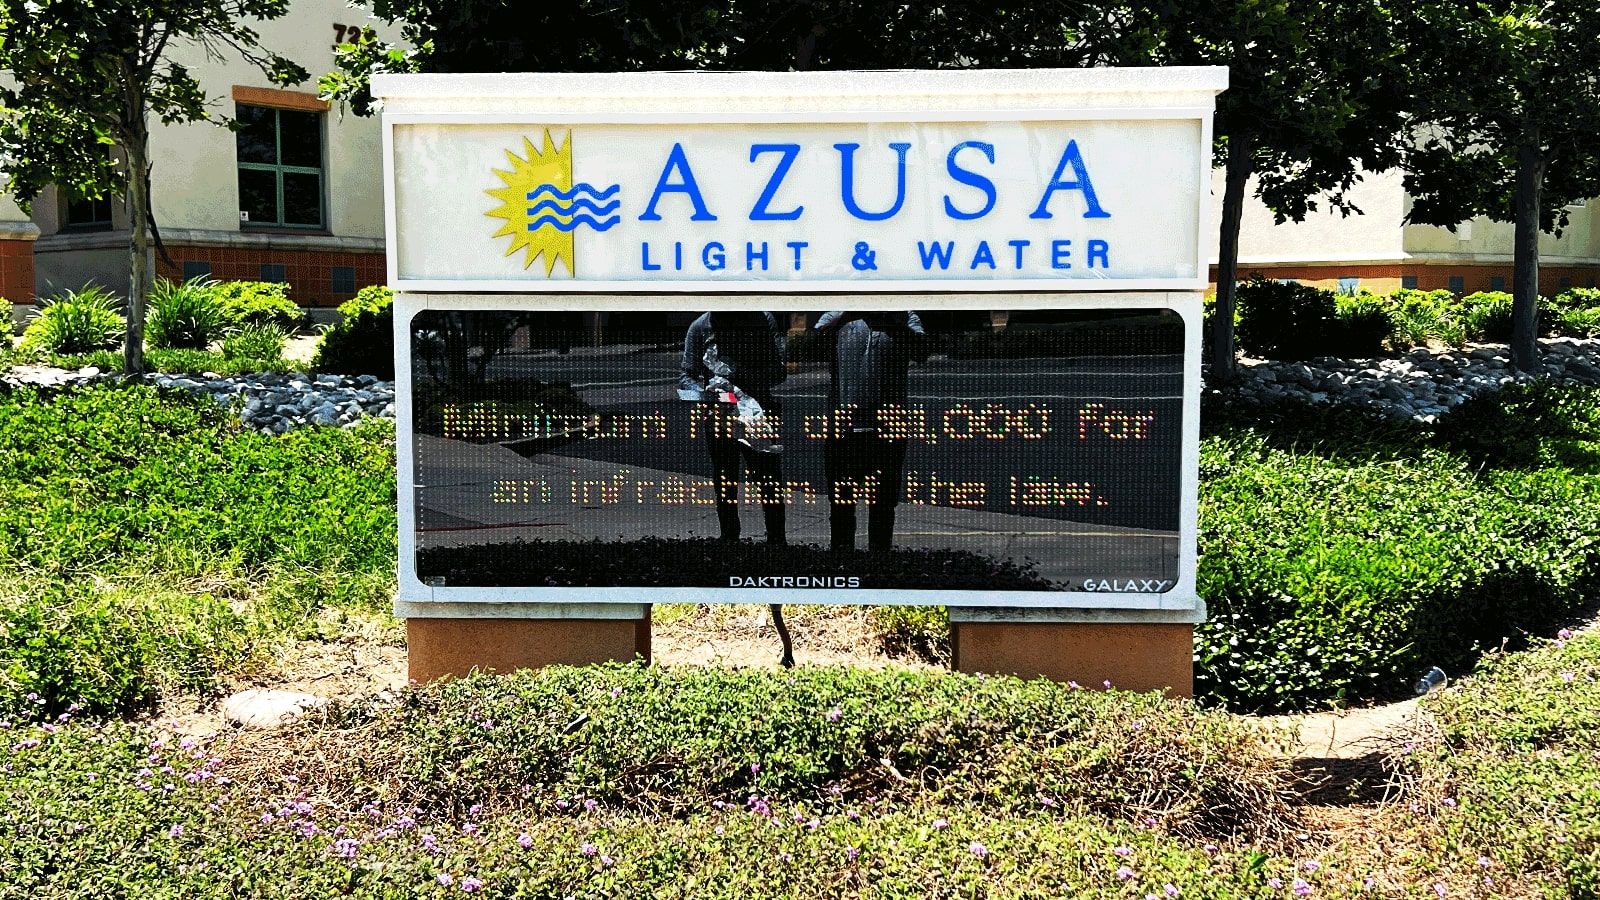 AZUSA push through sign installed outdoors